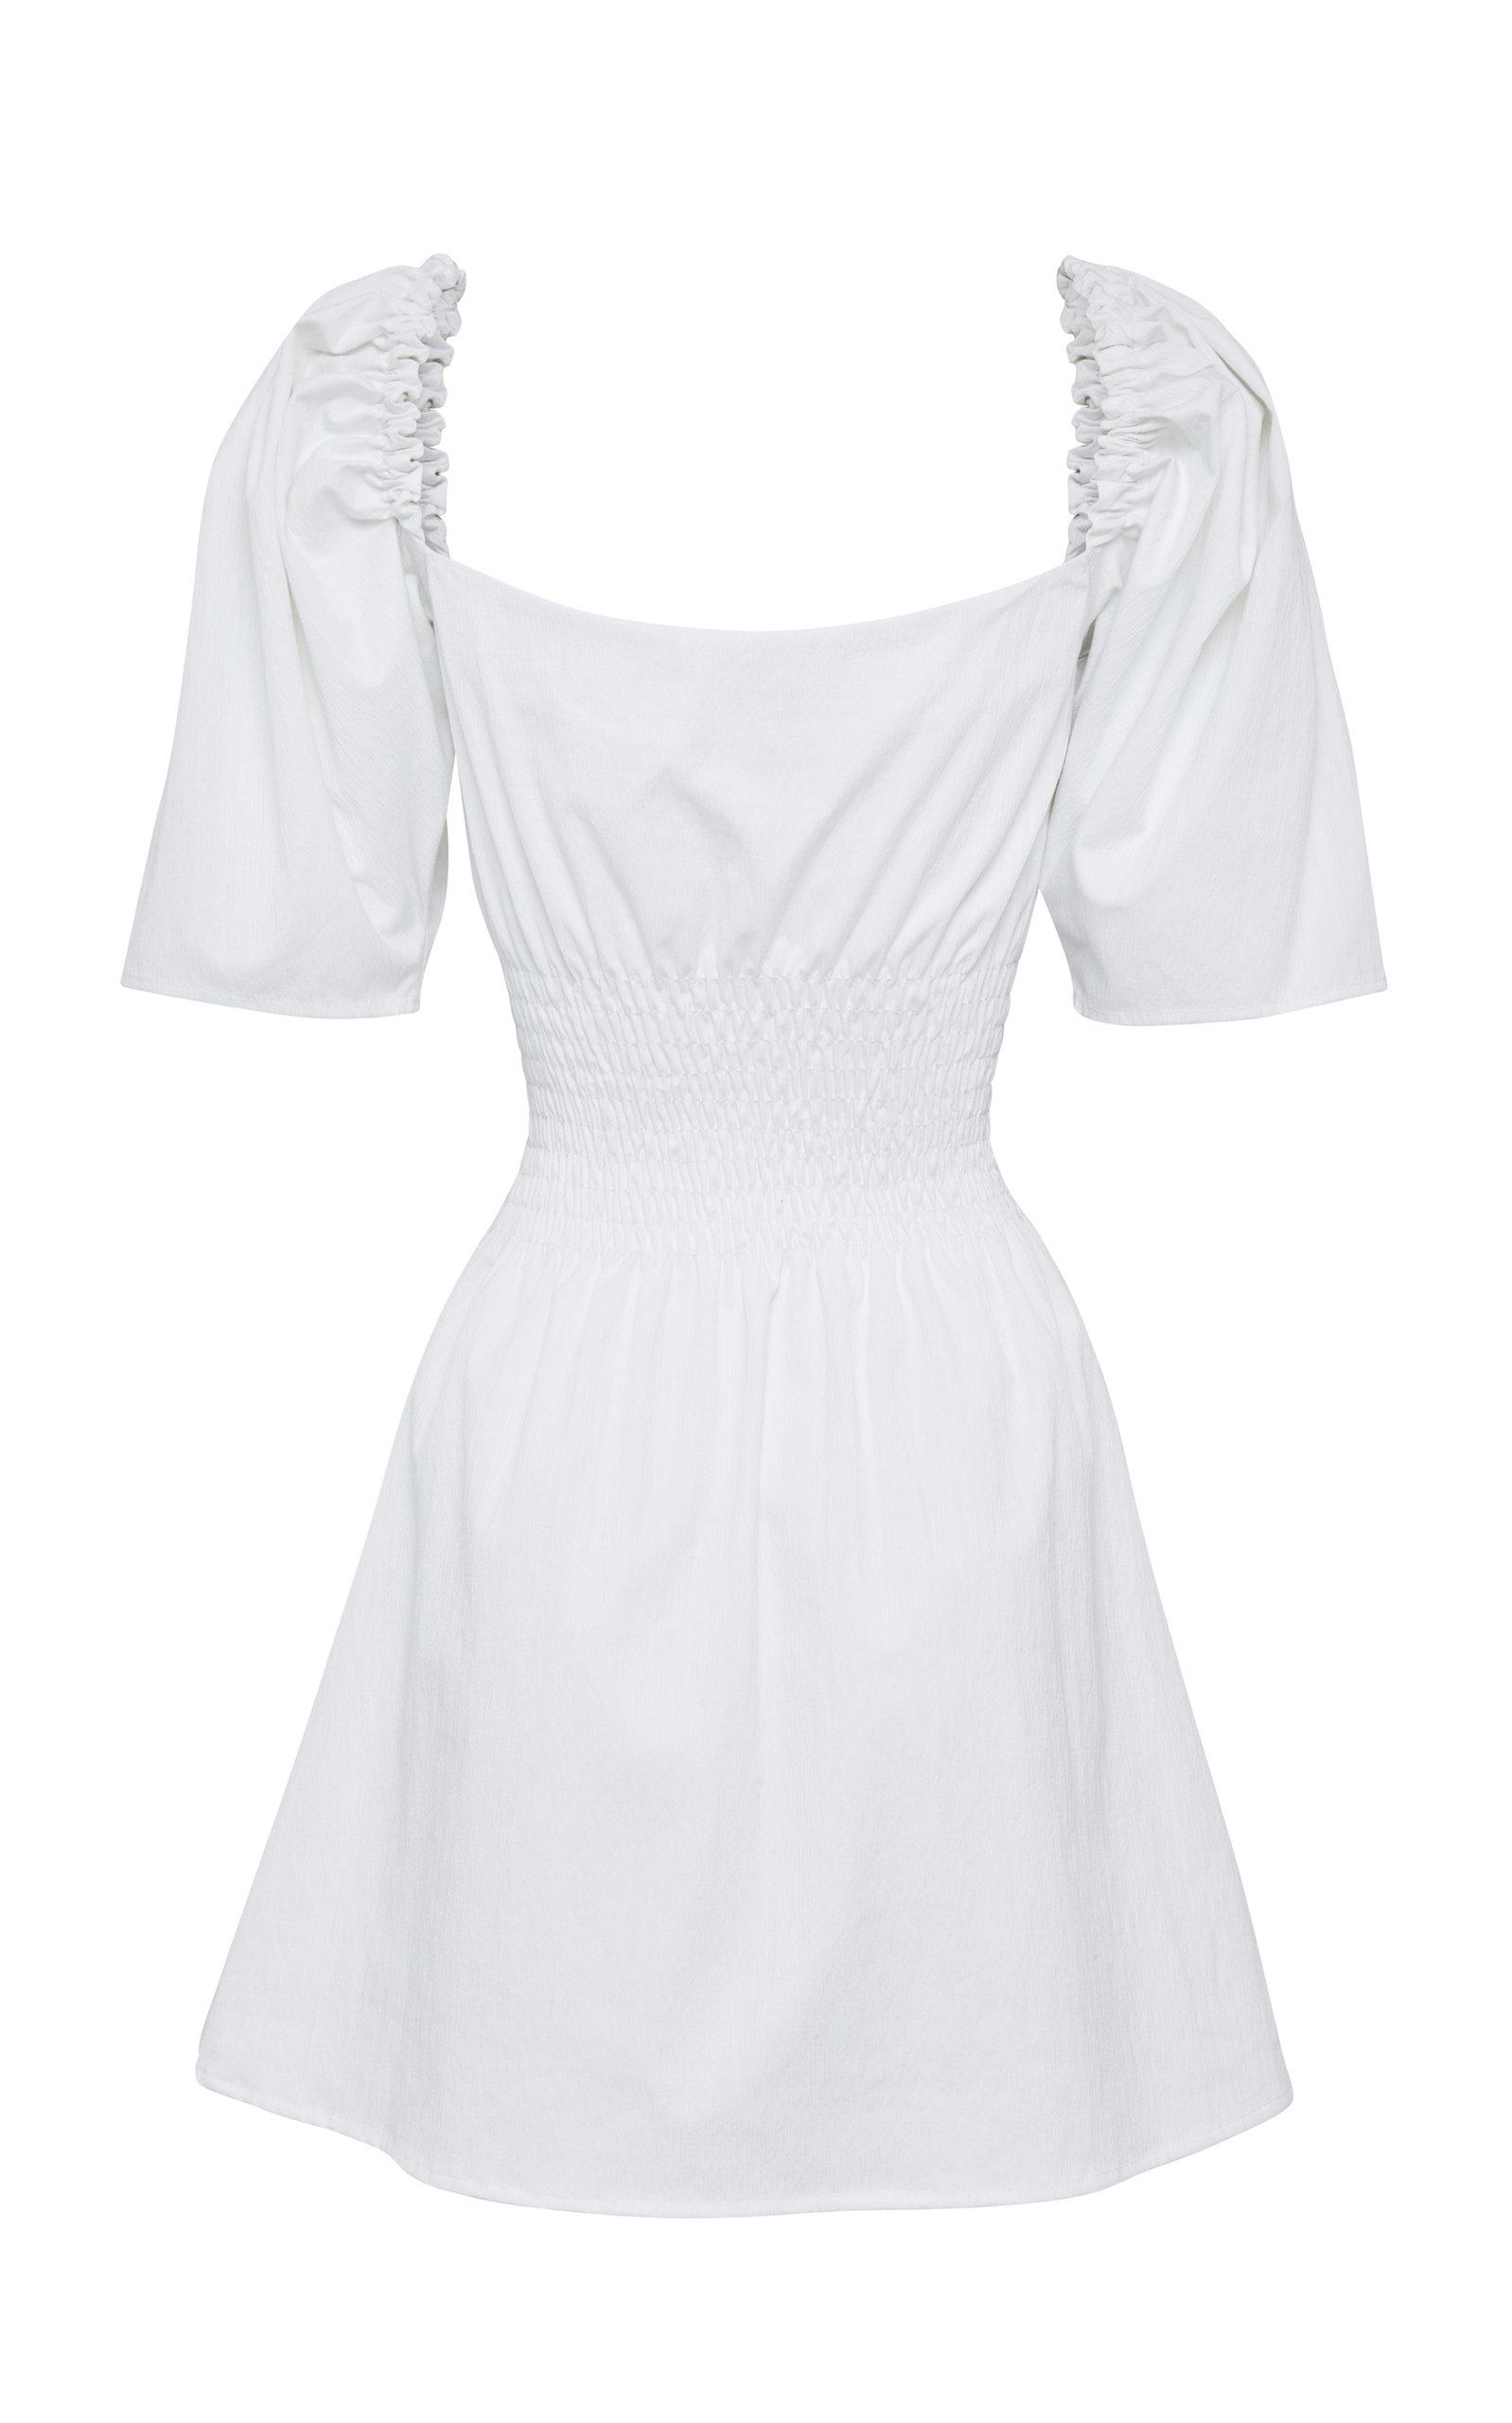 Anna Quan Cotton Terri Dress in White - Lyst